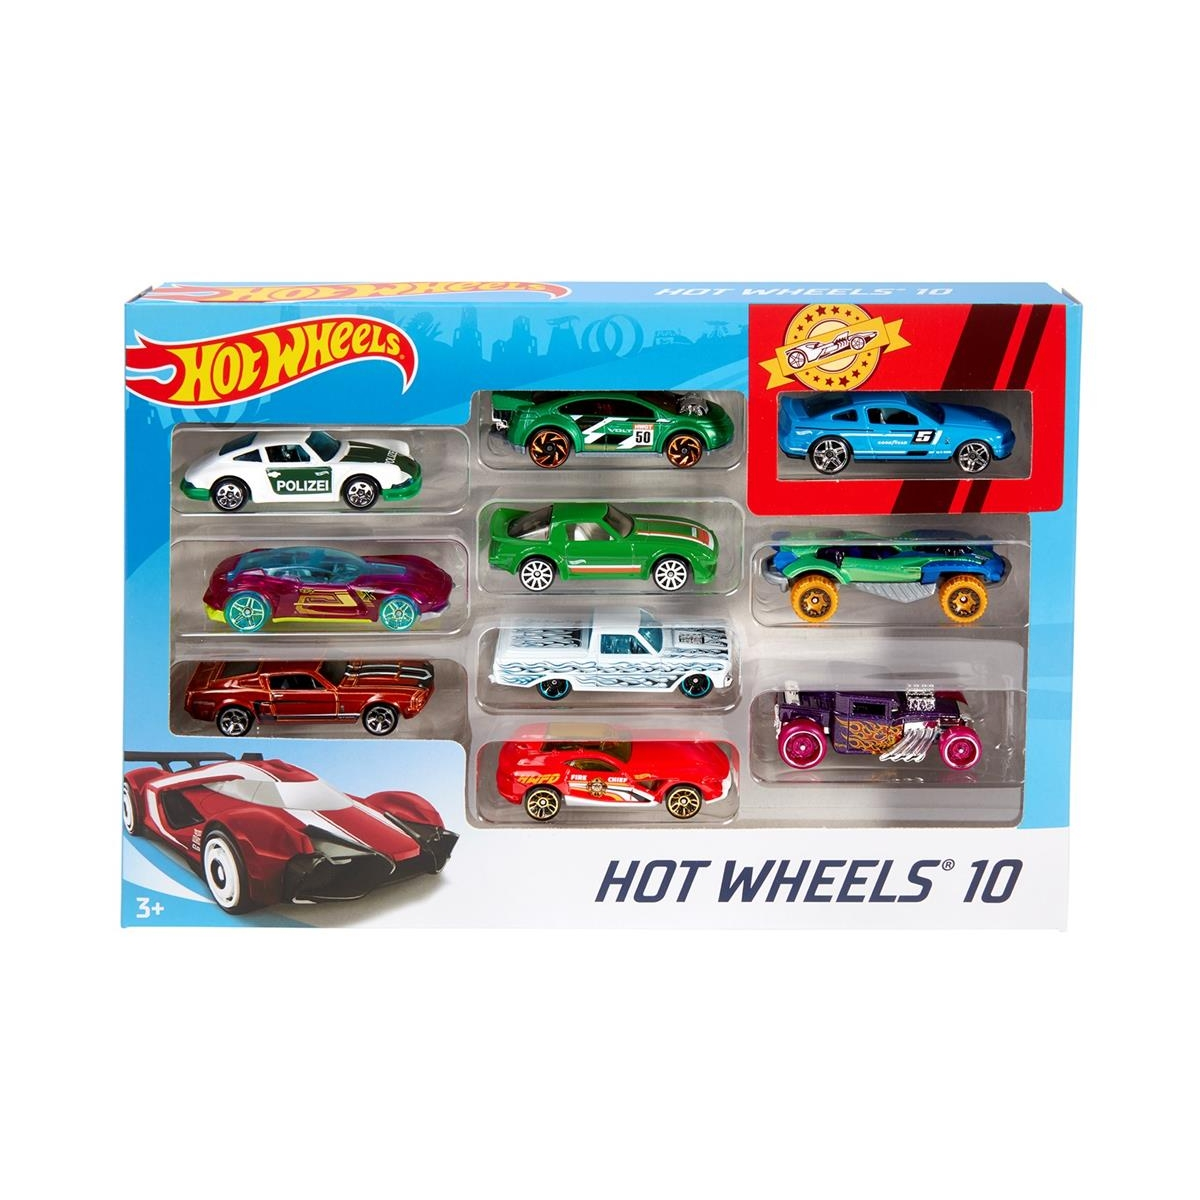 412496 HOT toy WHEELS vehicle